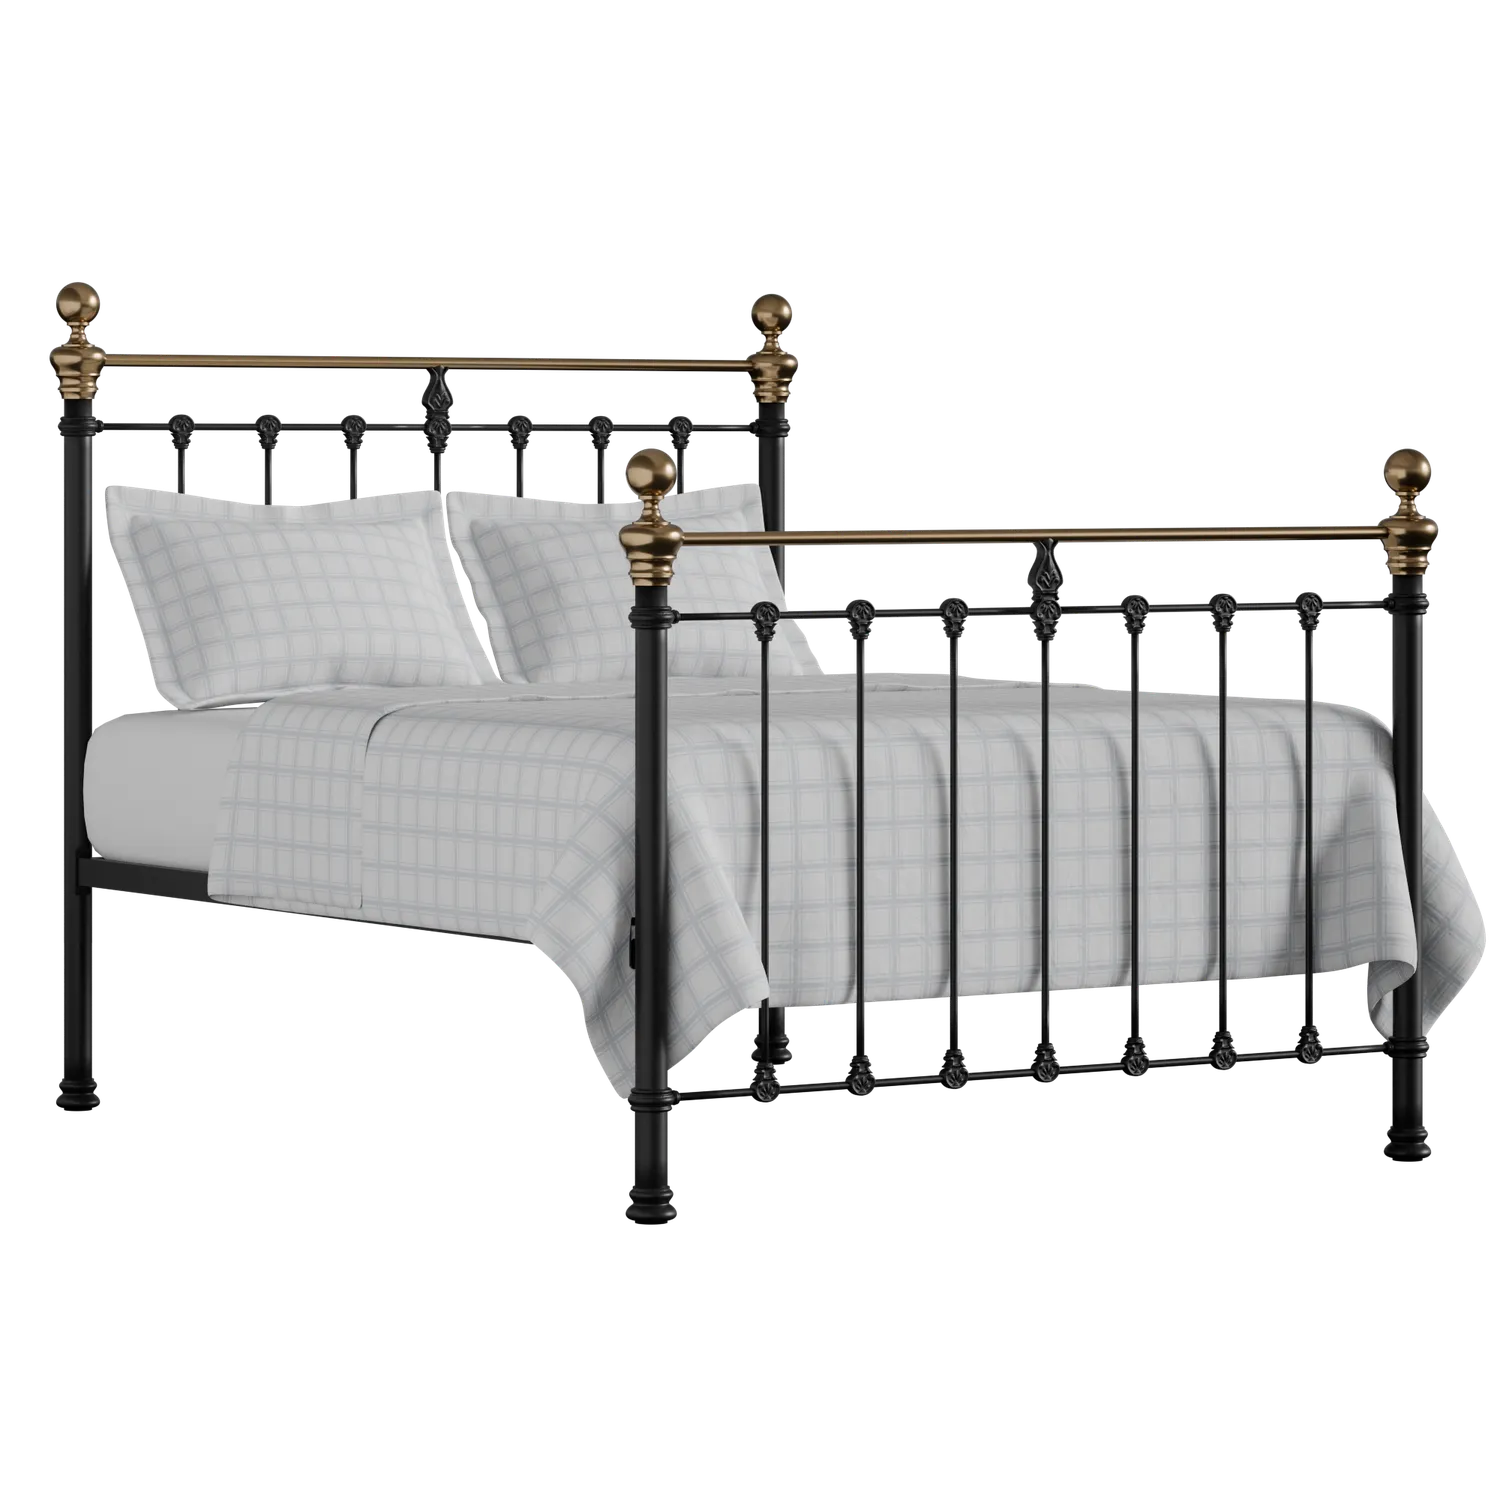 Hamilton iron/metal bed in black with Juno mattress